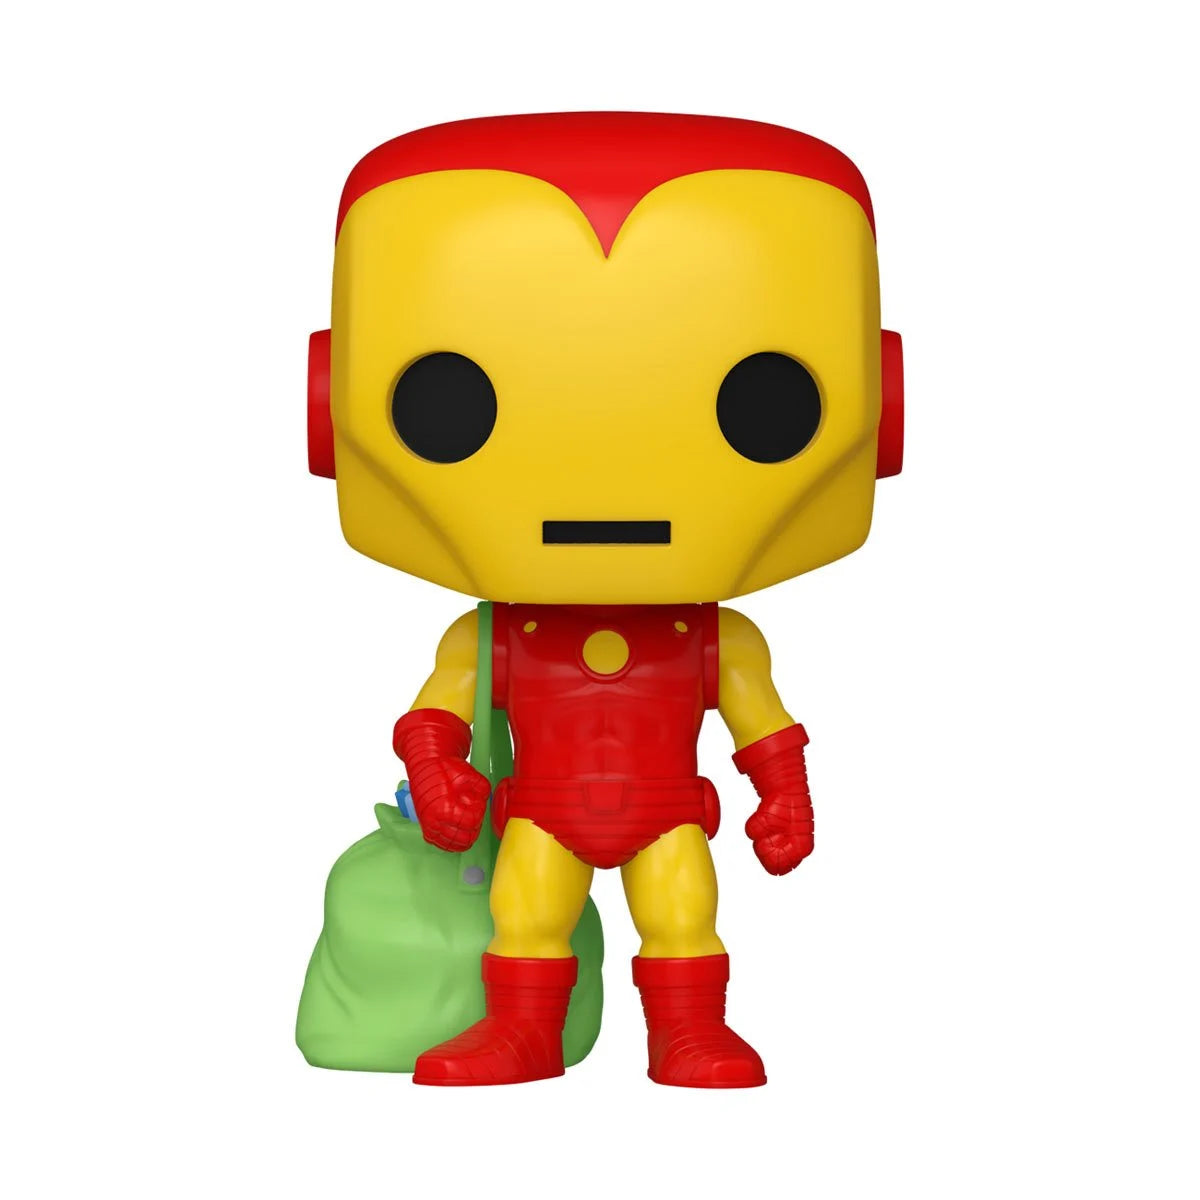 Funko Pop & Tee: Marvel Holiday - Playera Extra Chica Con Iron Man Glow